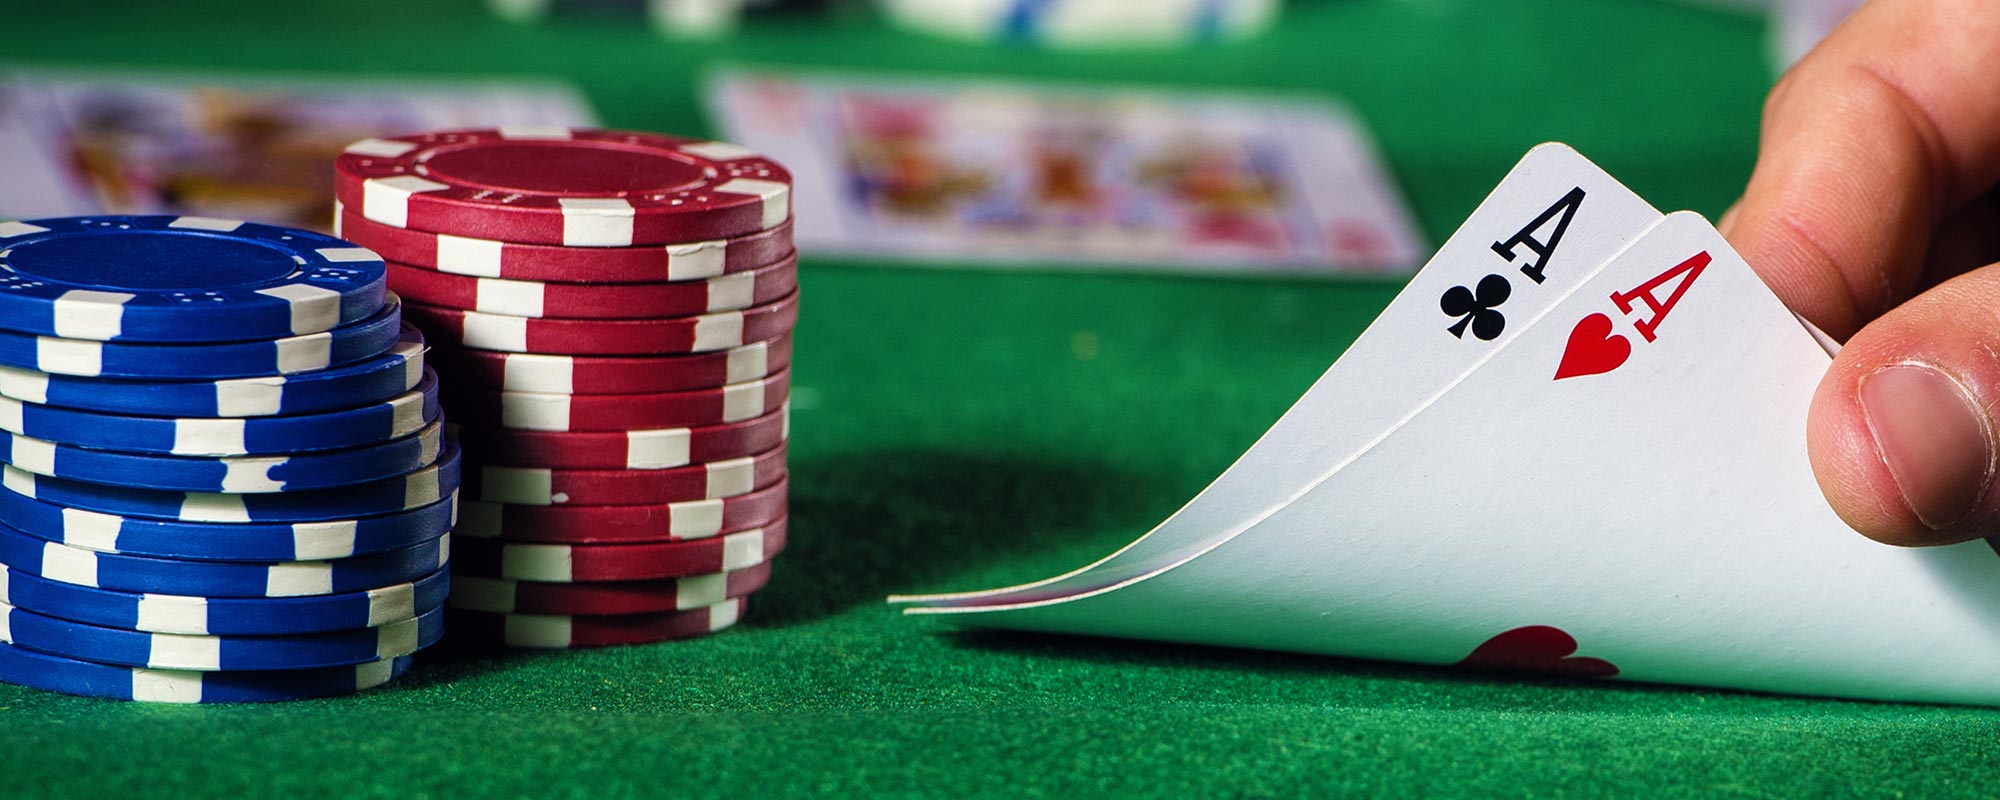 casino poker rules